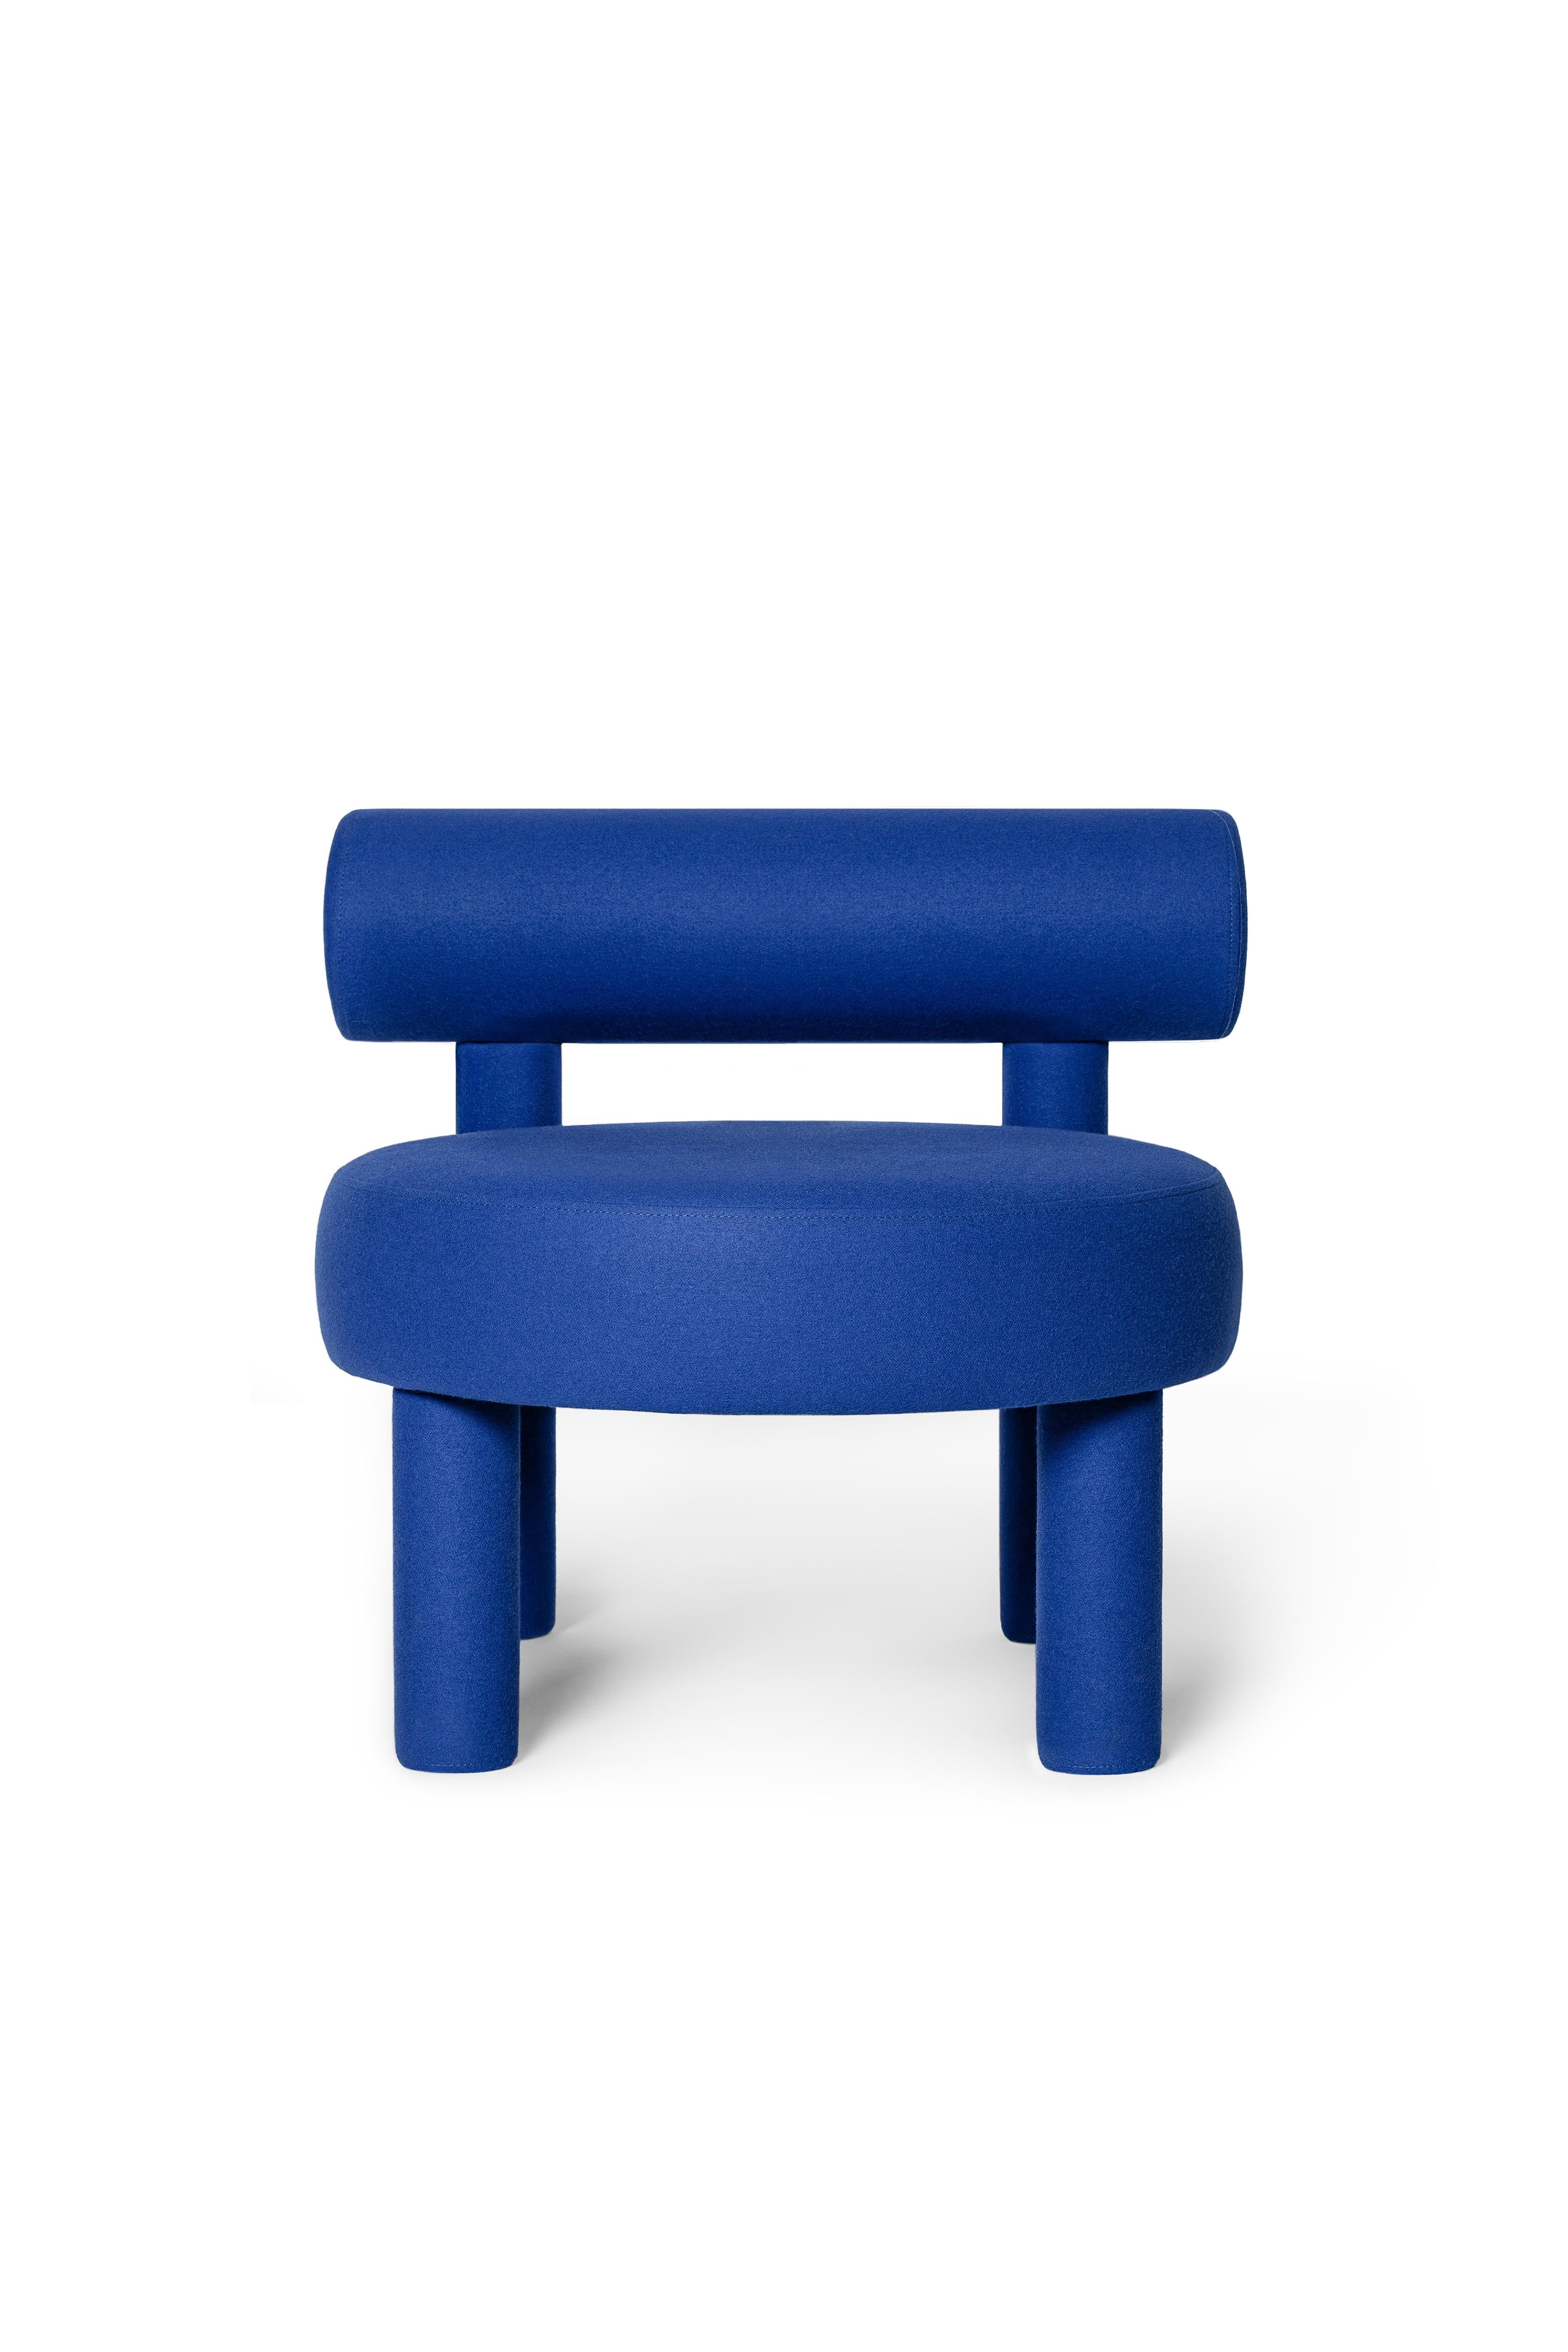 Fabric Modern Low Chair Gropius CS1 in Fire Retardant Cobalt Blue Wool fabric by NOOM